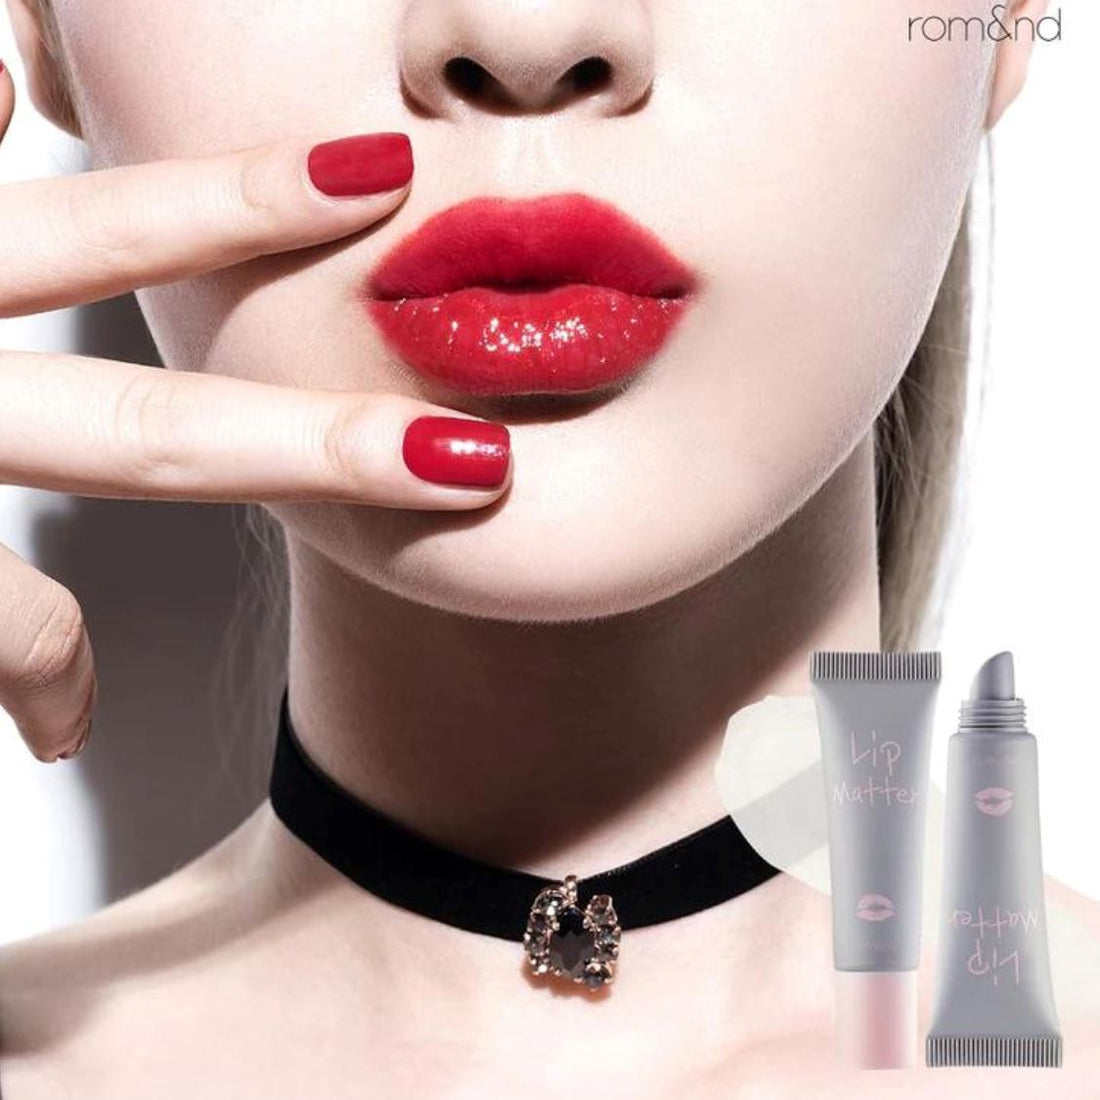 romand Lip Matter Makeup romand ORION XO Sri Lanka